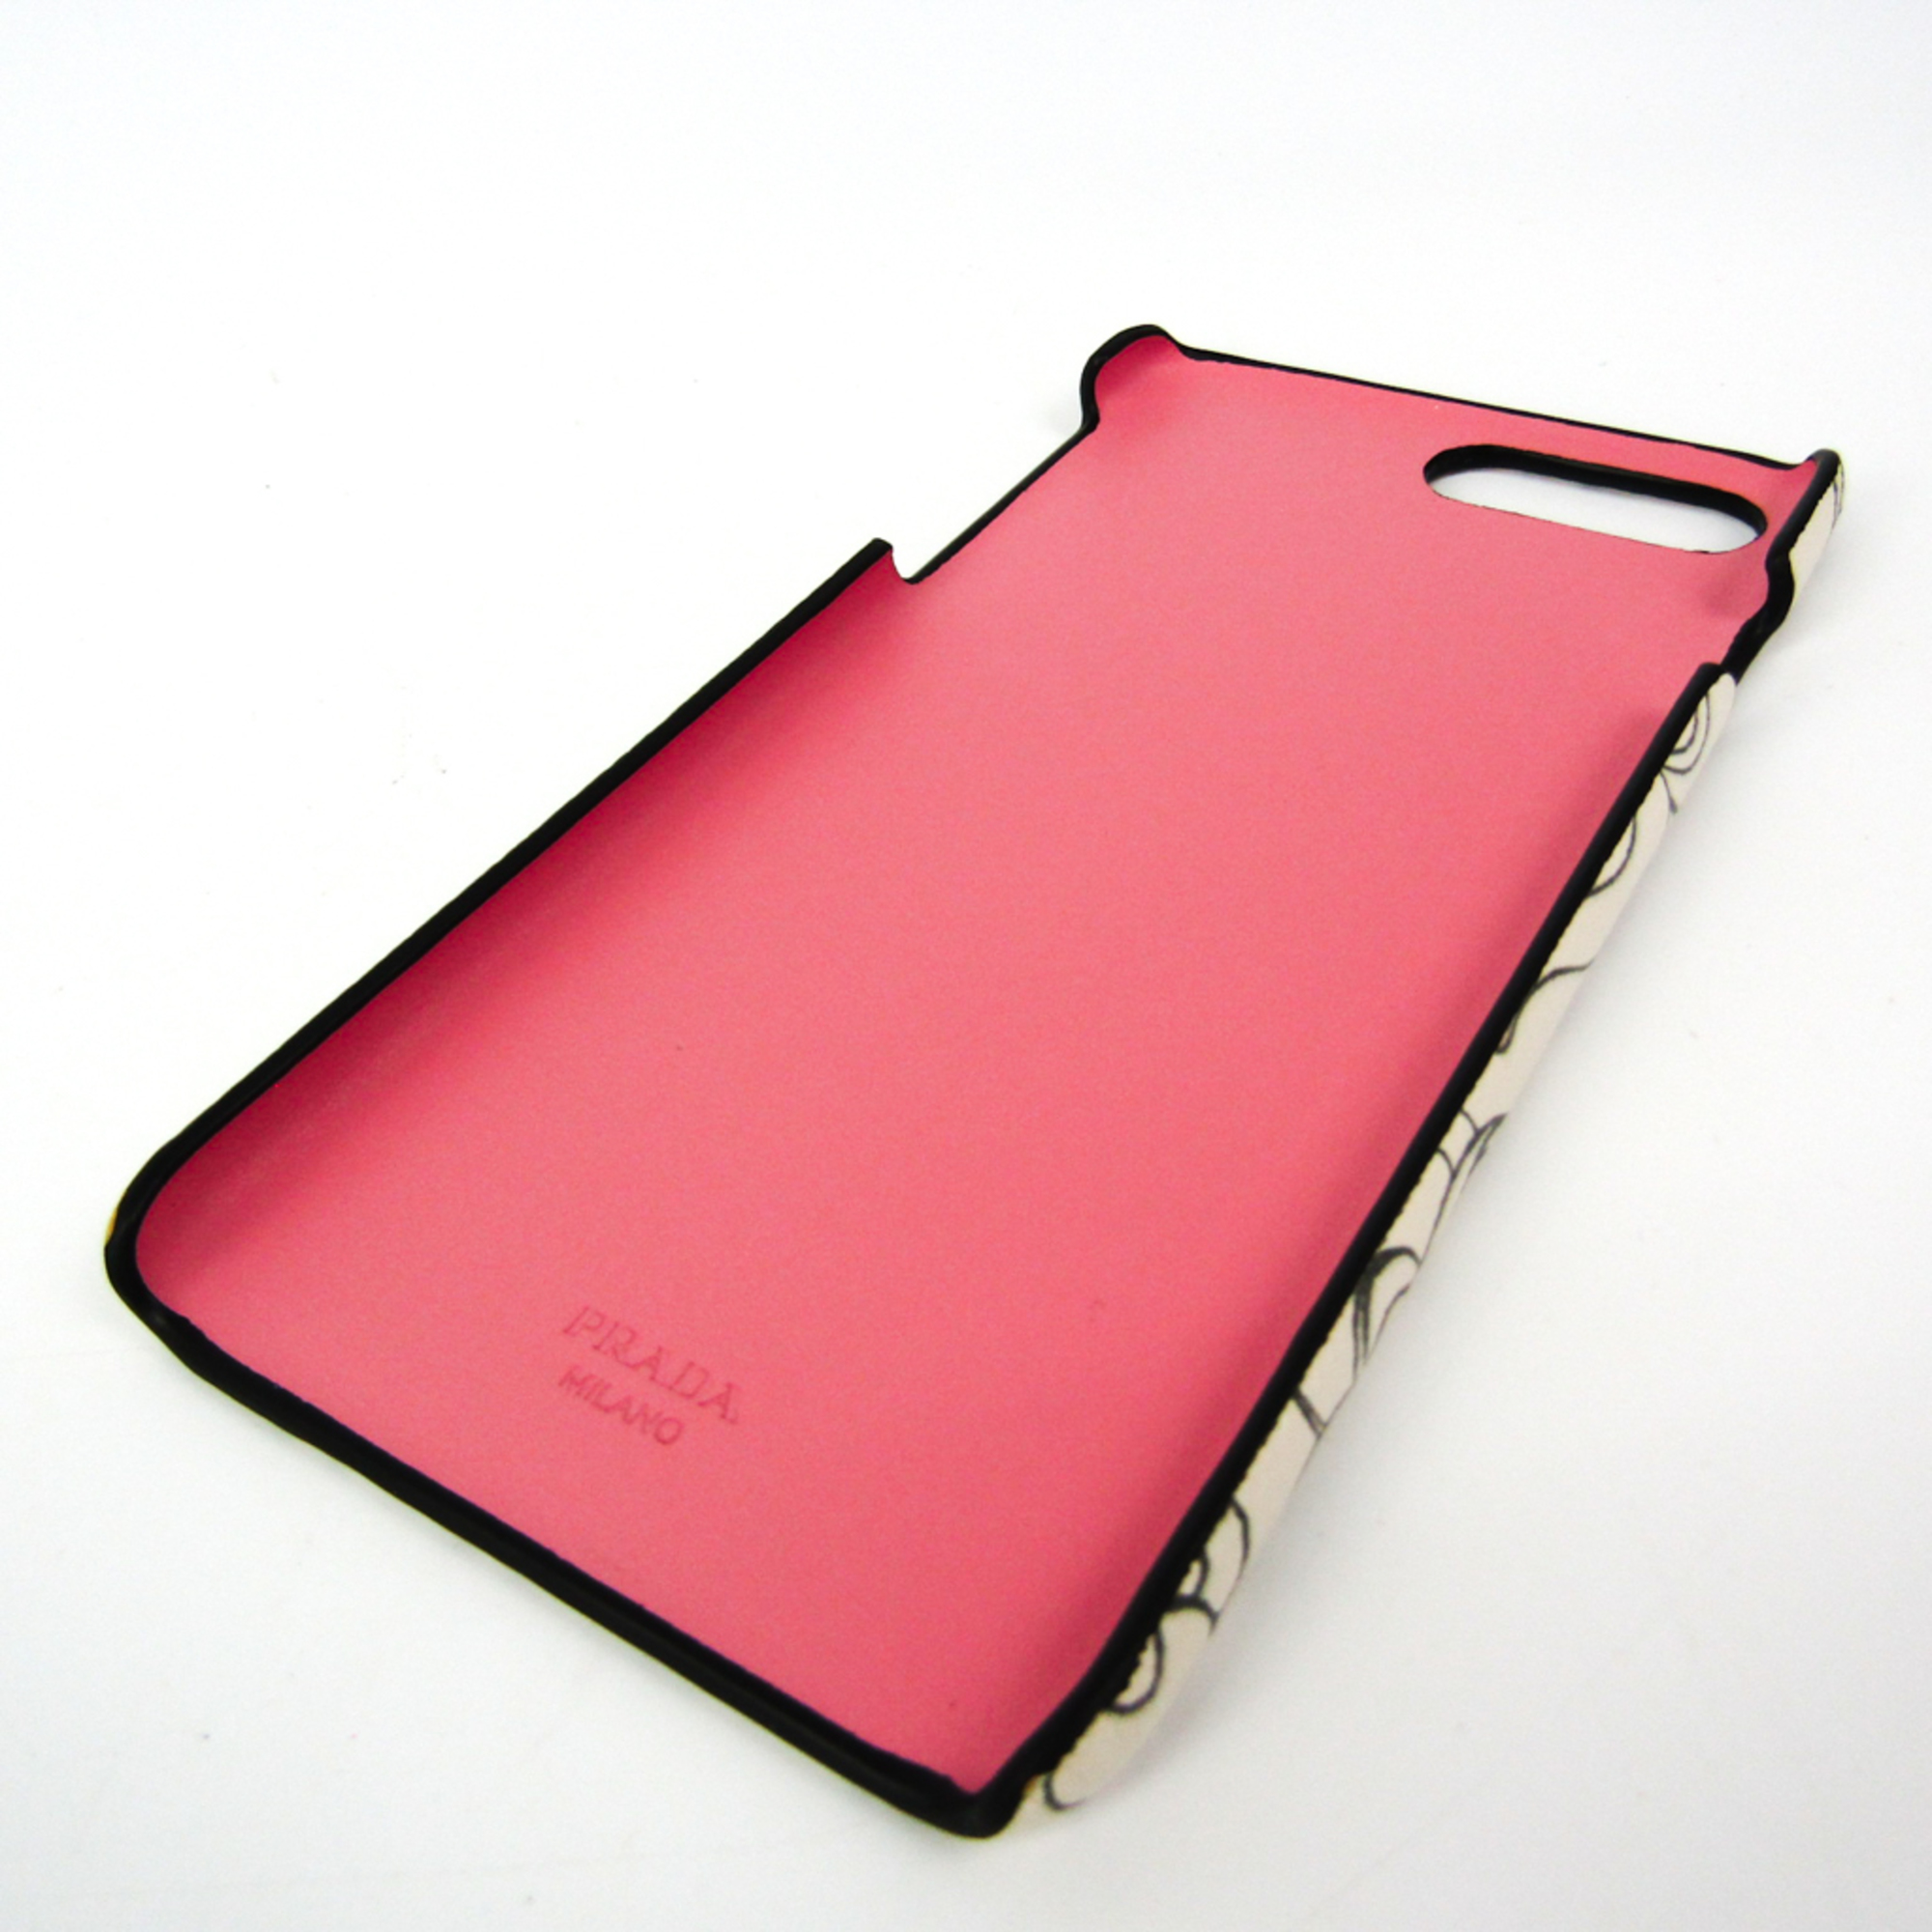 Prada Leather Phone Bumper For IPhone 7 Plus Black,Cream,Gray,Light Pink Rabbit print